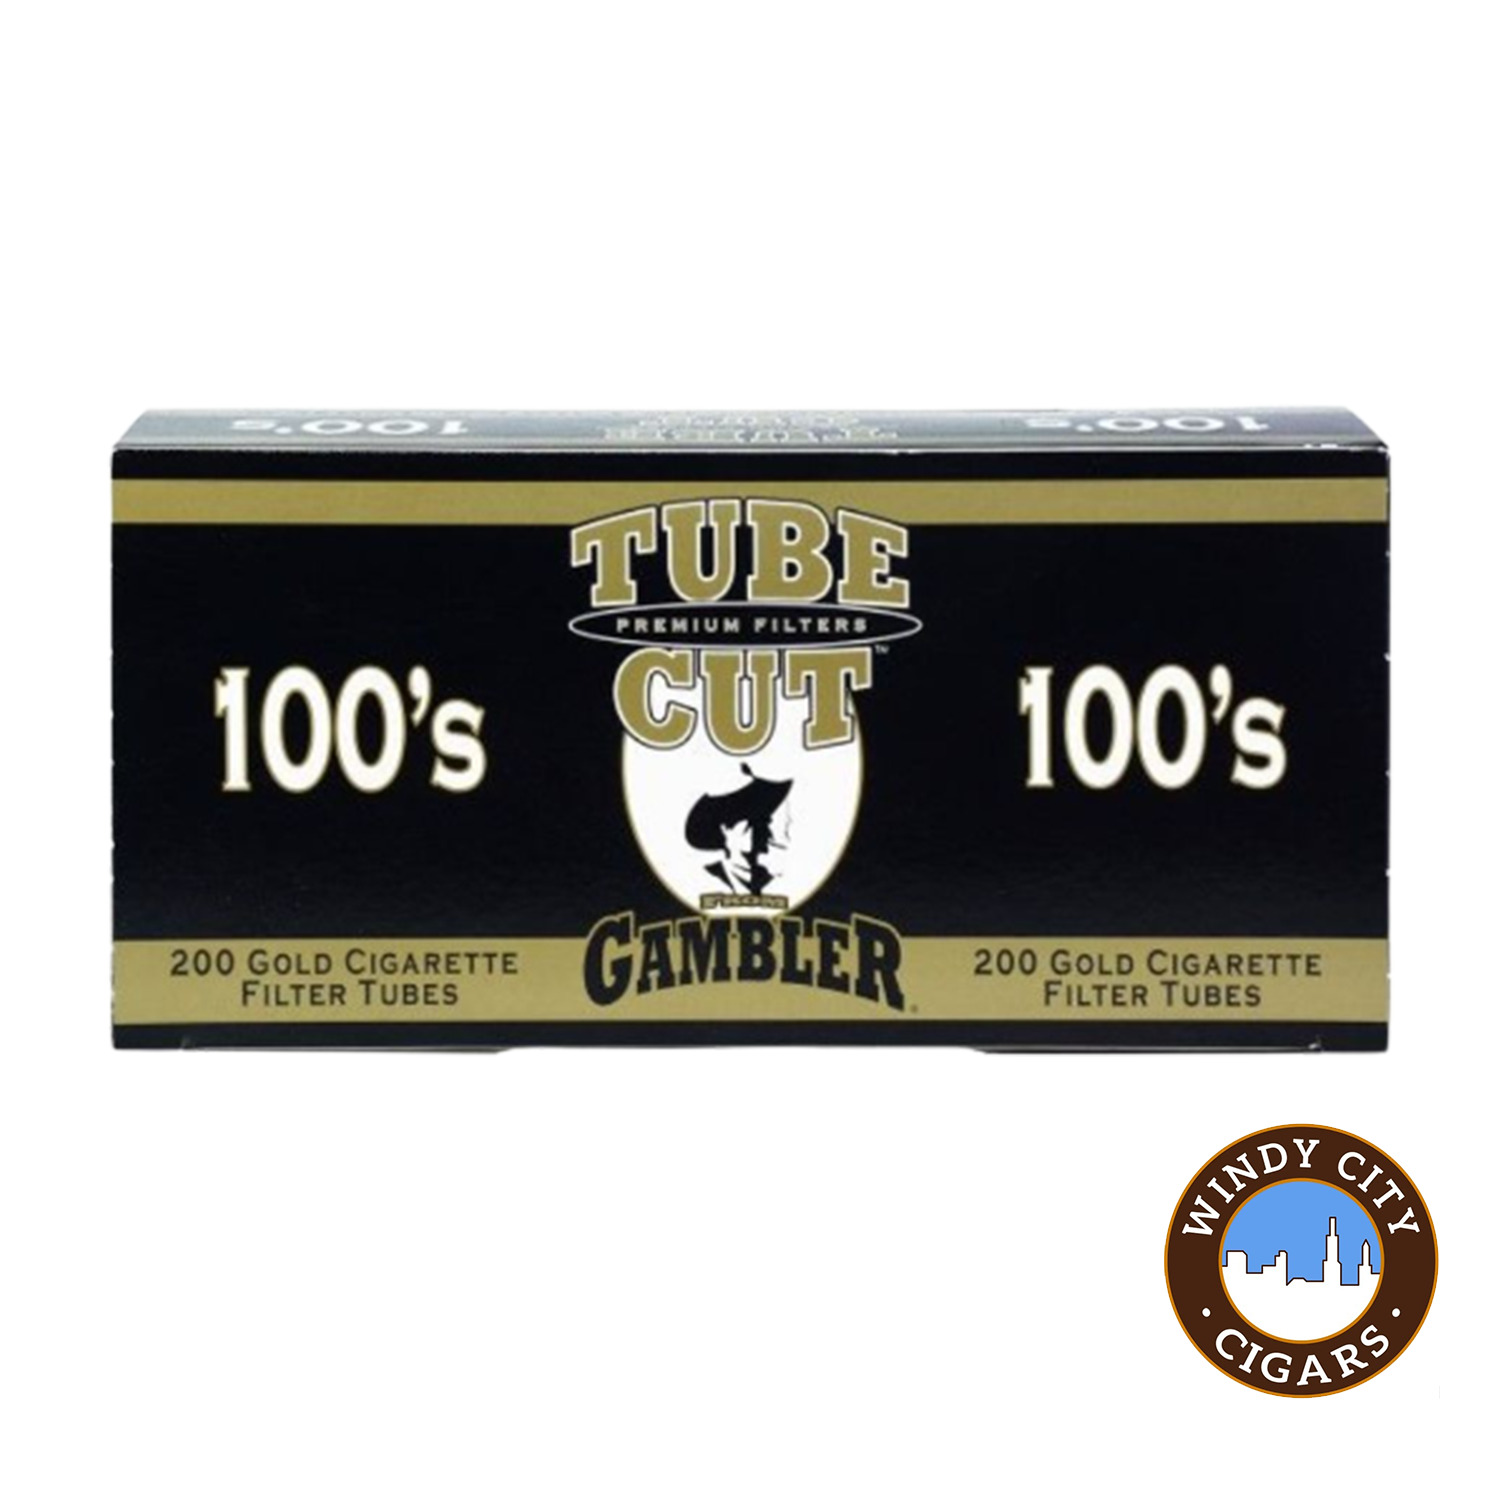 Tube Cut Gold 100s Cigarette 200ct Tubes - 10 Boxes